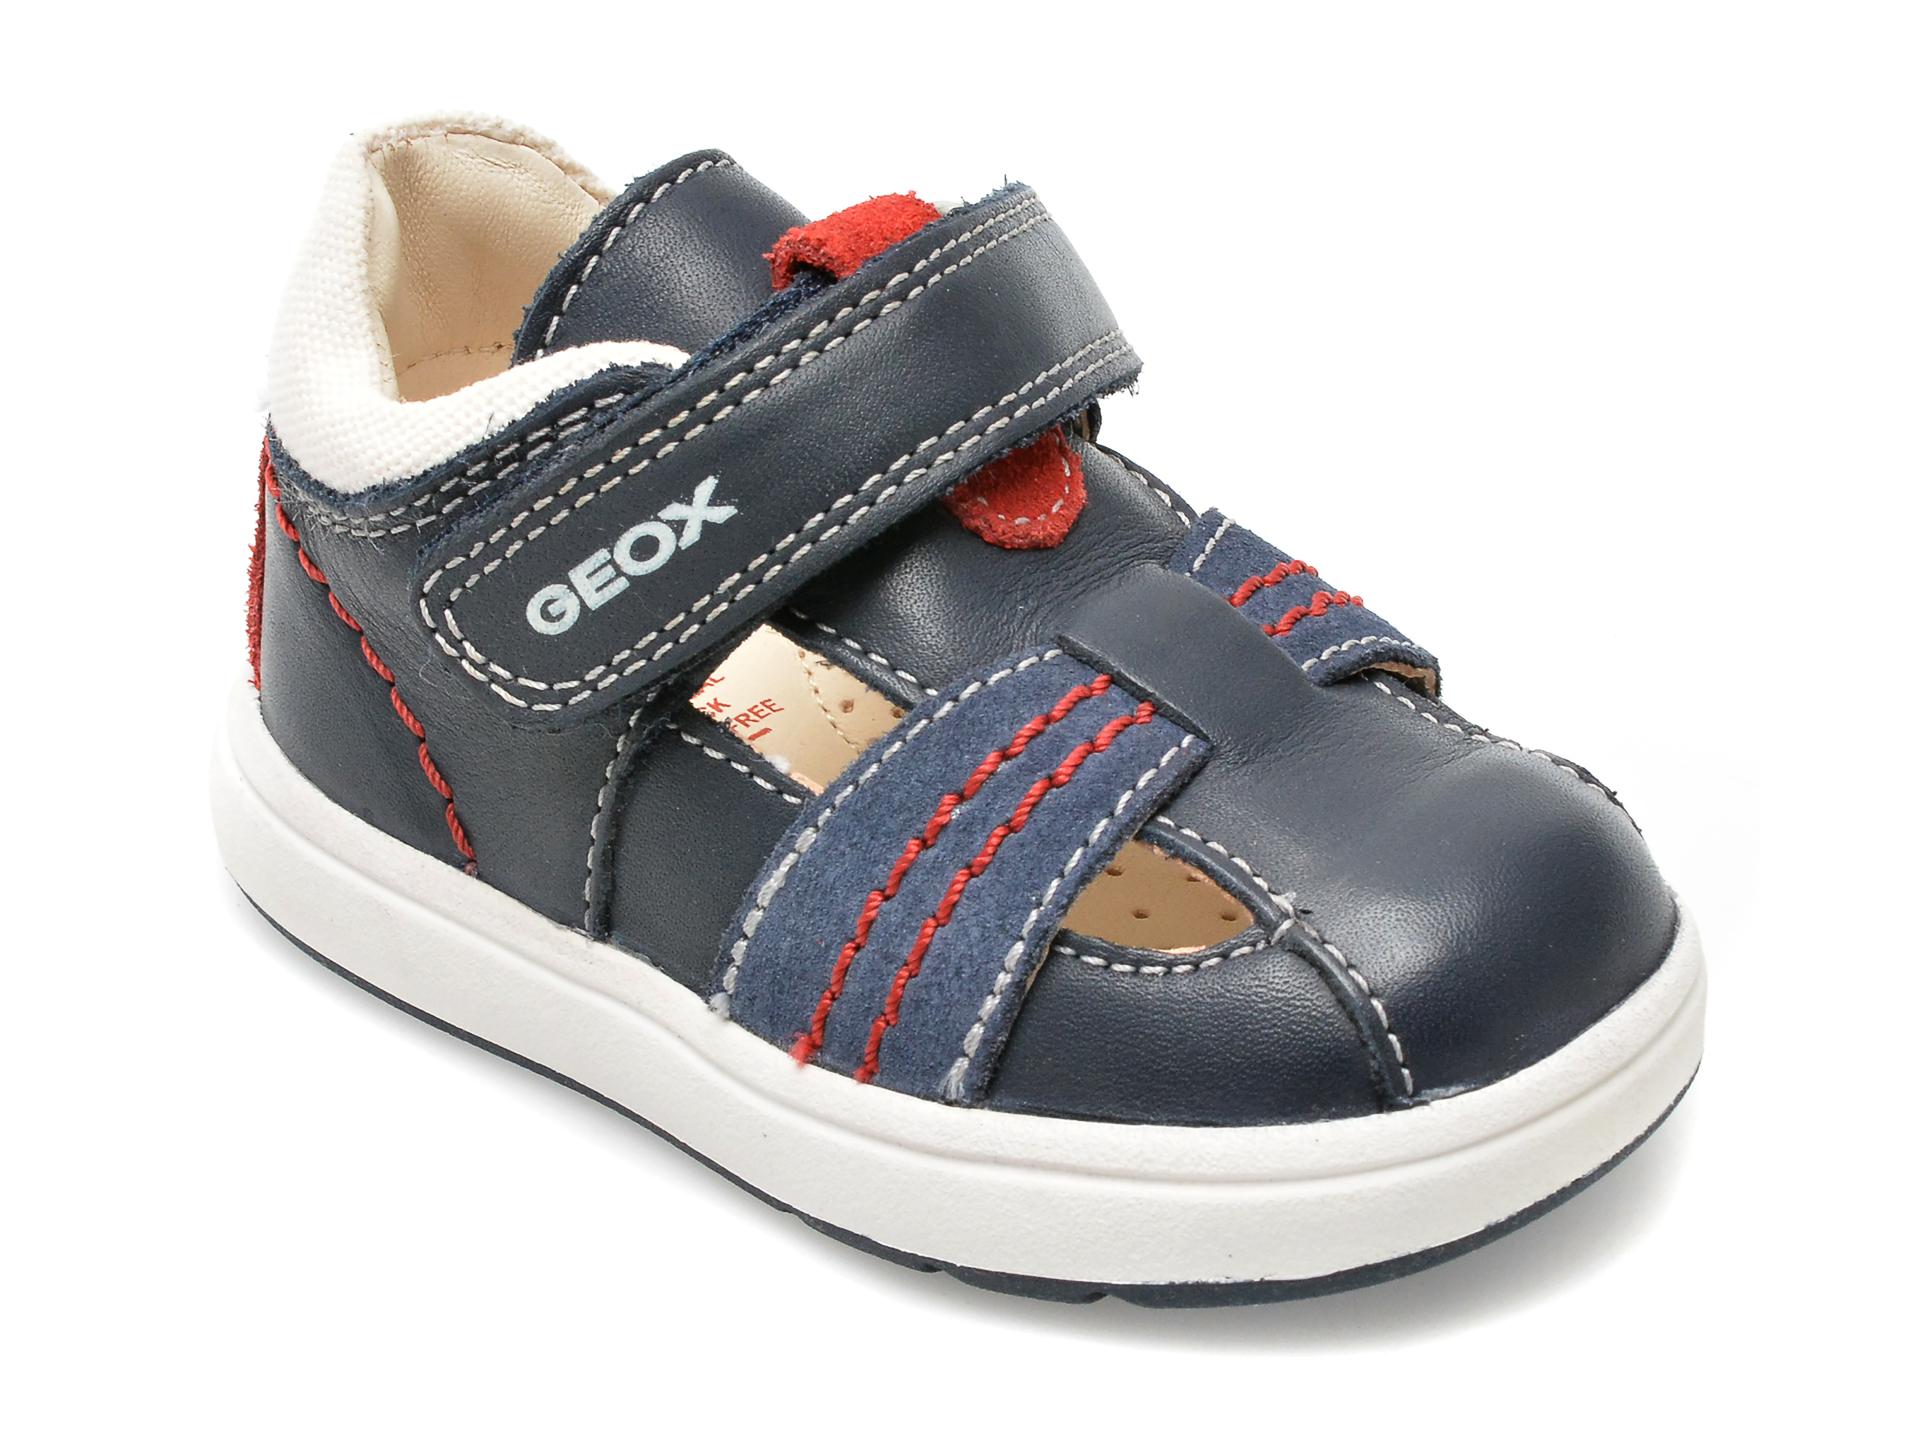 Pantofi GEOX bleumarin, B154DA, din material textil si piele naturala BAIETI 2023-06-04